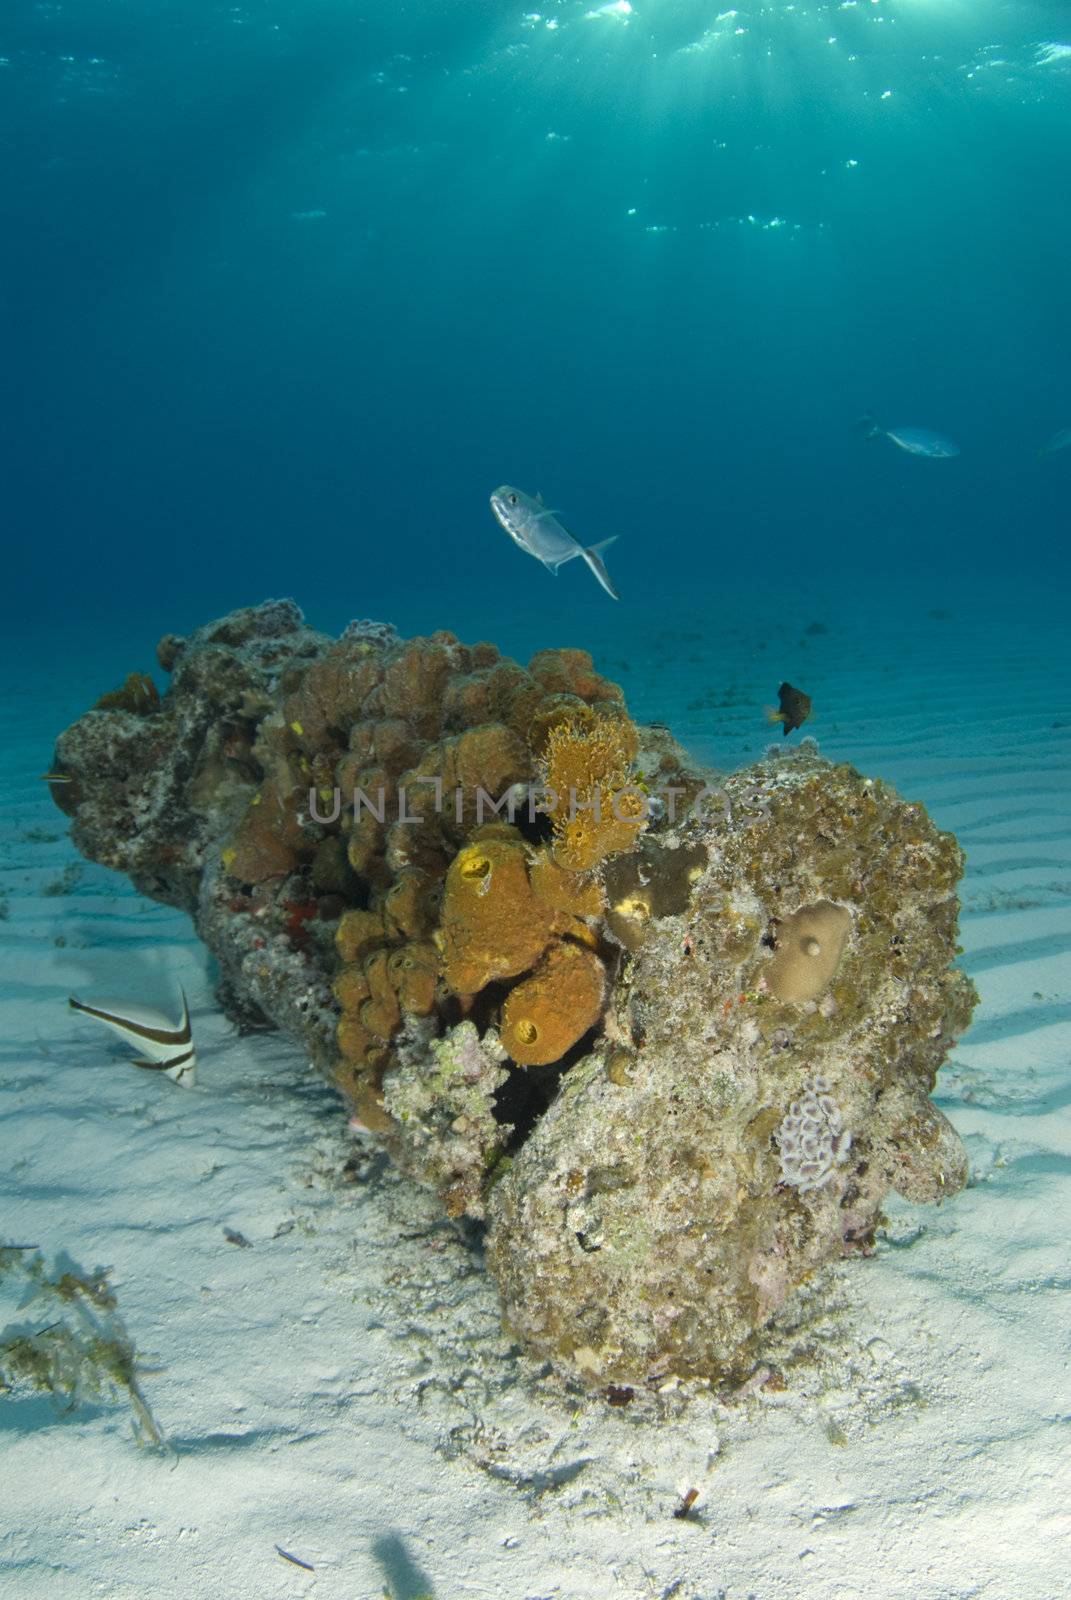 Bahamas Encrusted Wreckage by Naluphoto